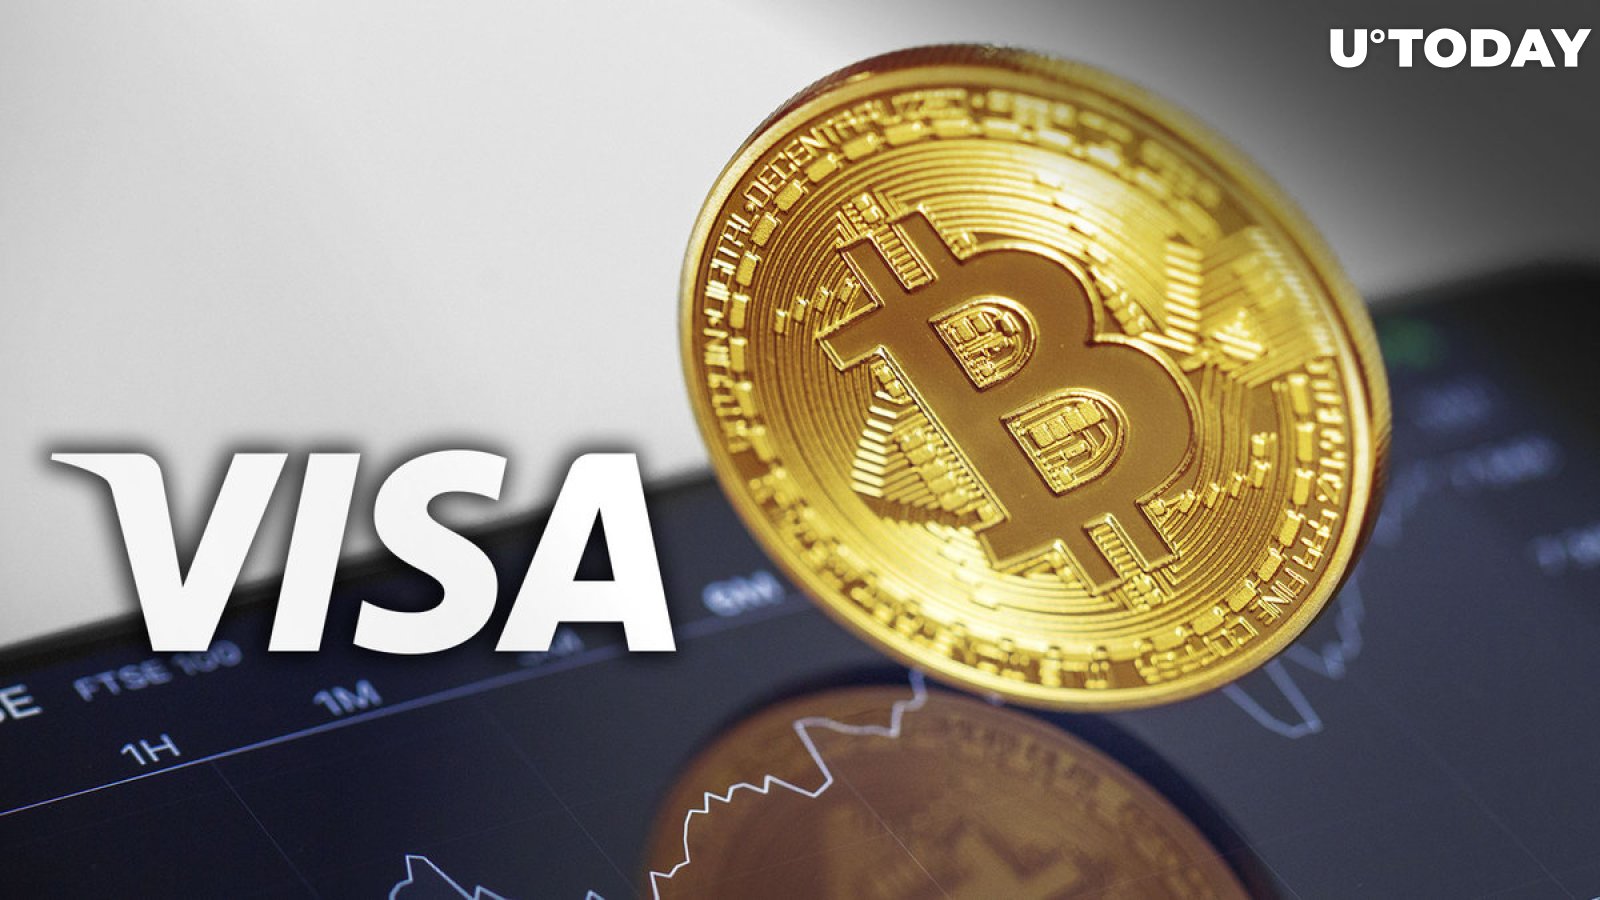 Bitcoin (BTC) Surpasses Visa Transaction Volume